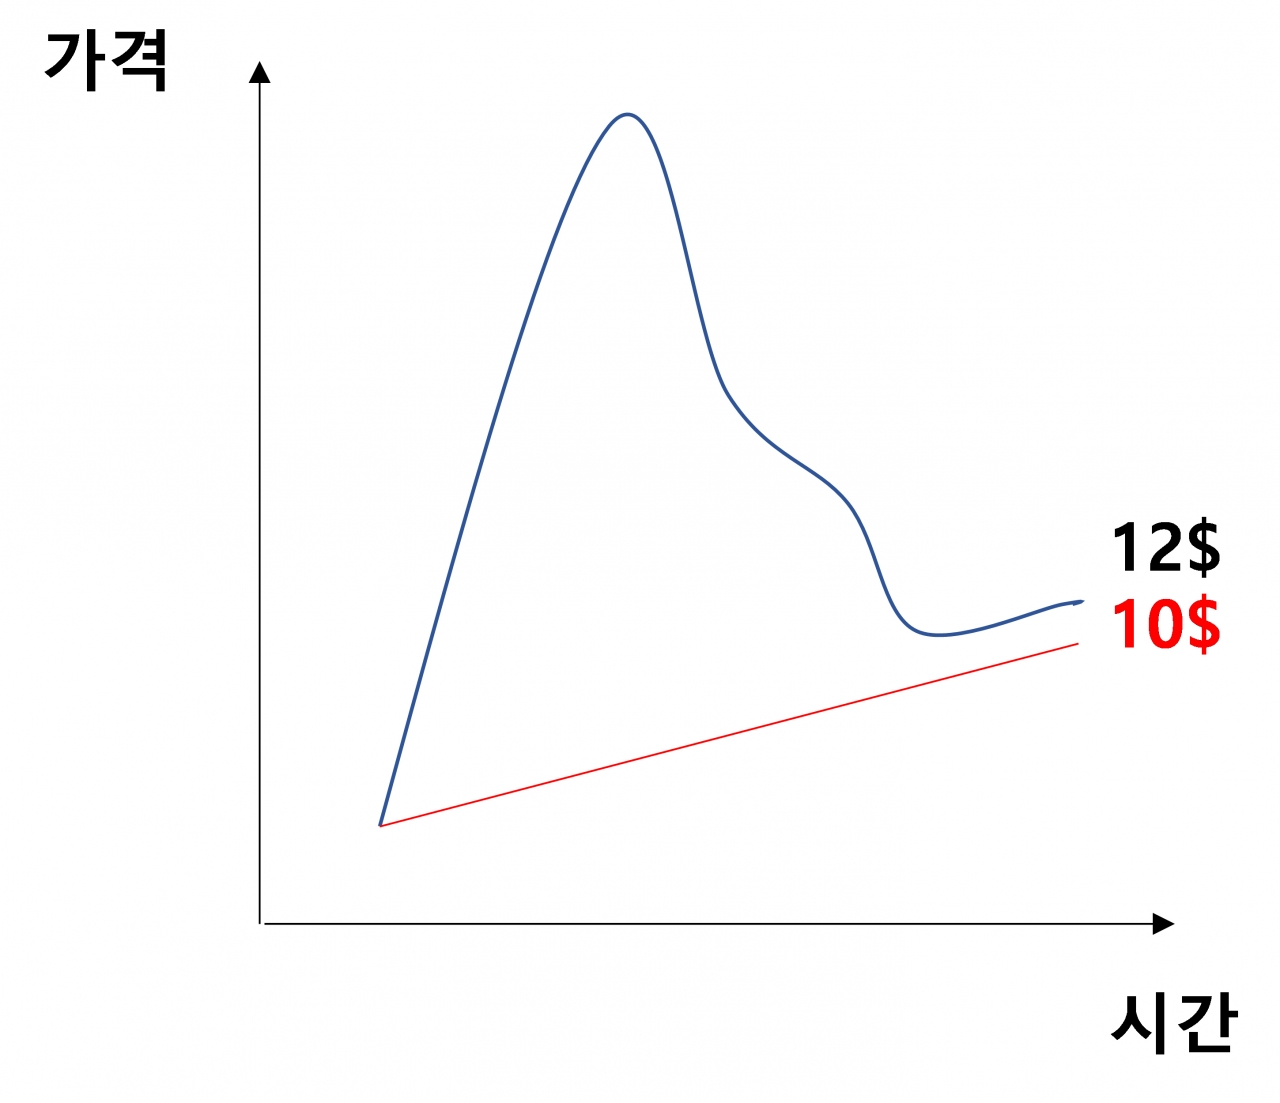 Figure 9. 내재 가치보다 높지만 불안정한 가격(Note: 파란색 선은 토큰 가격, 빨간색 선은 내재가치를 의미, 출처 MAMA Ventures)